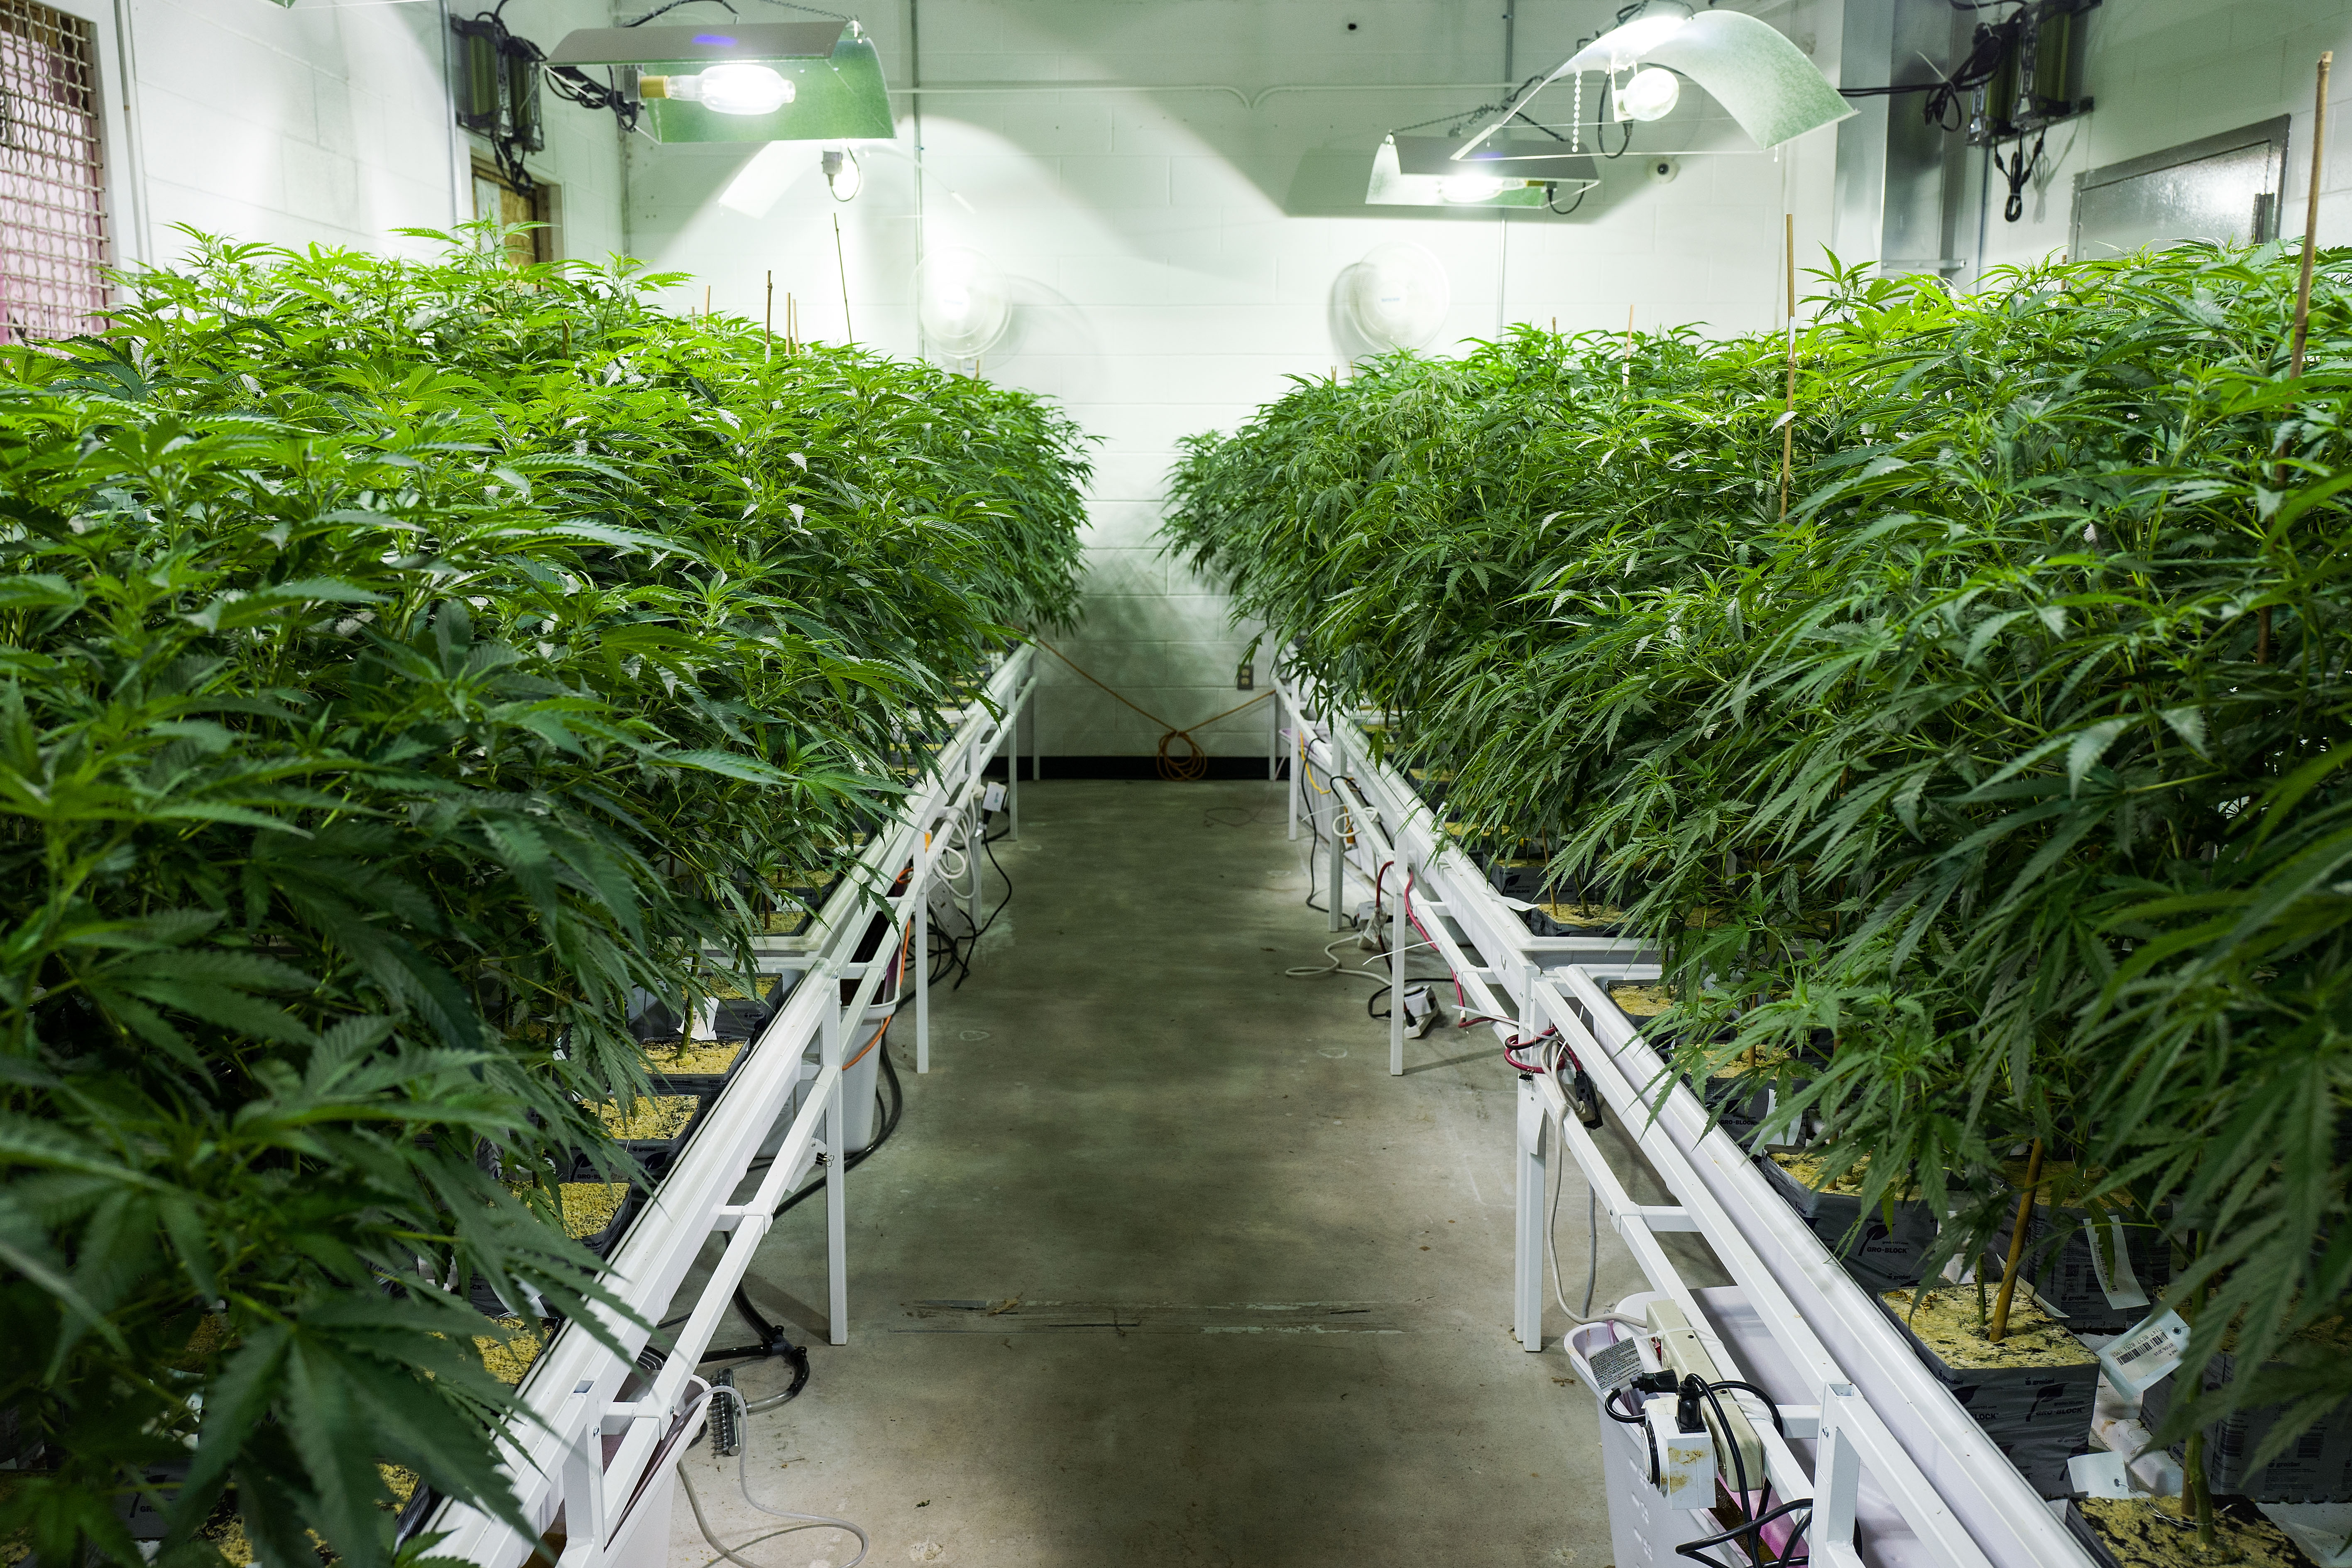 Kannabiszfarm Johnstownban - Fotó: AFP/Drew Angerer/Getty Images